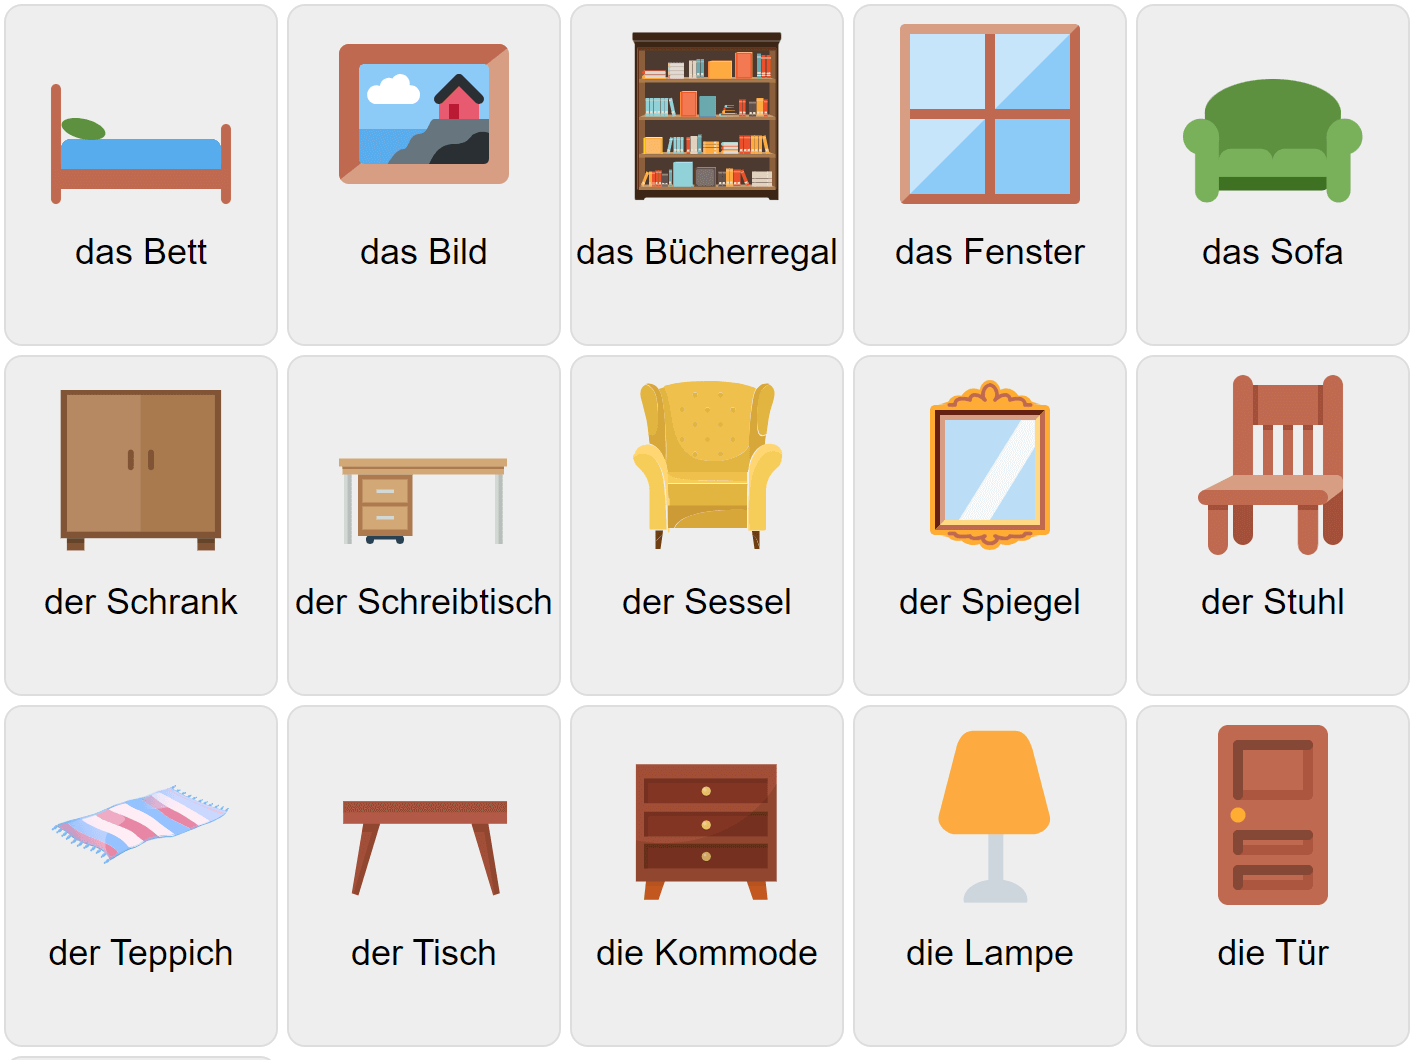 Furniture in German